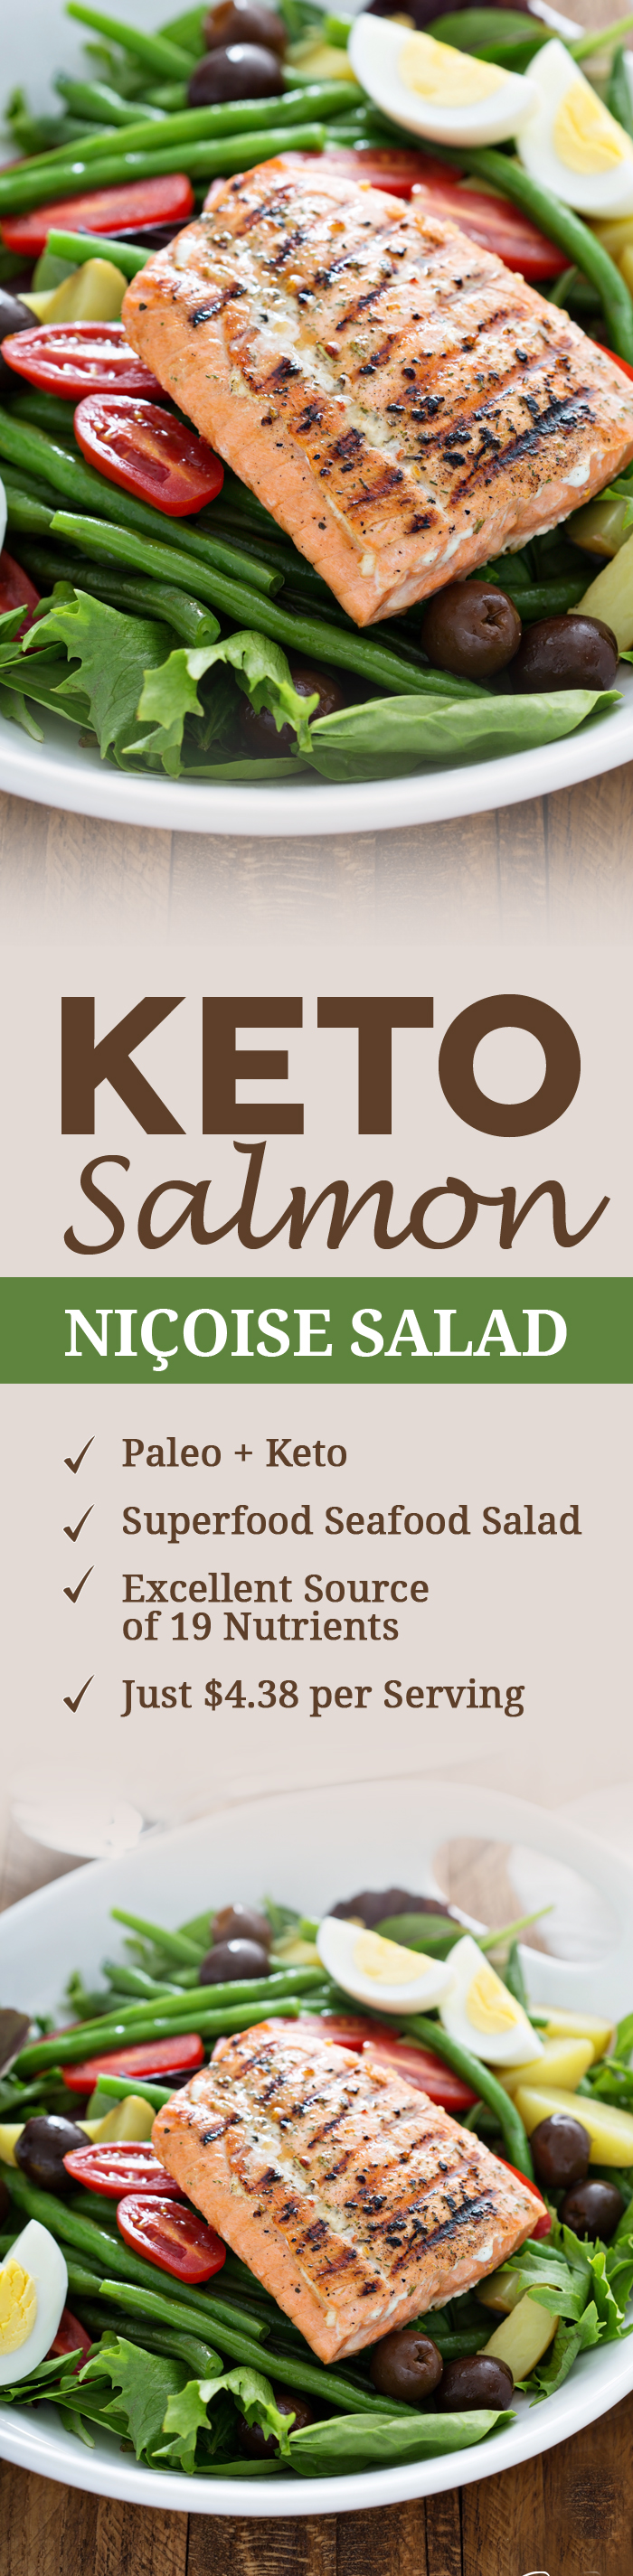 Keto Salmon Nicoise Salad - Meal Genius